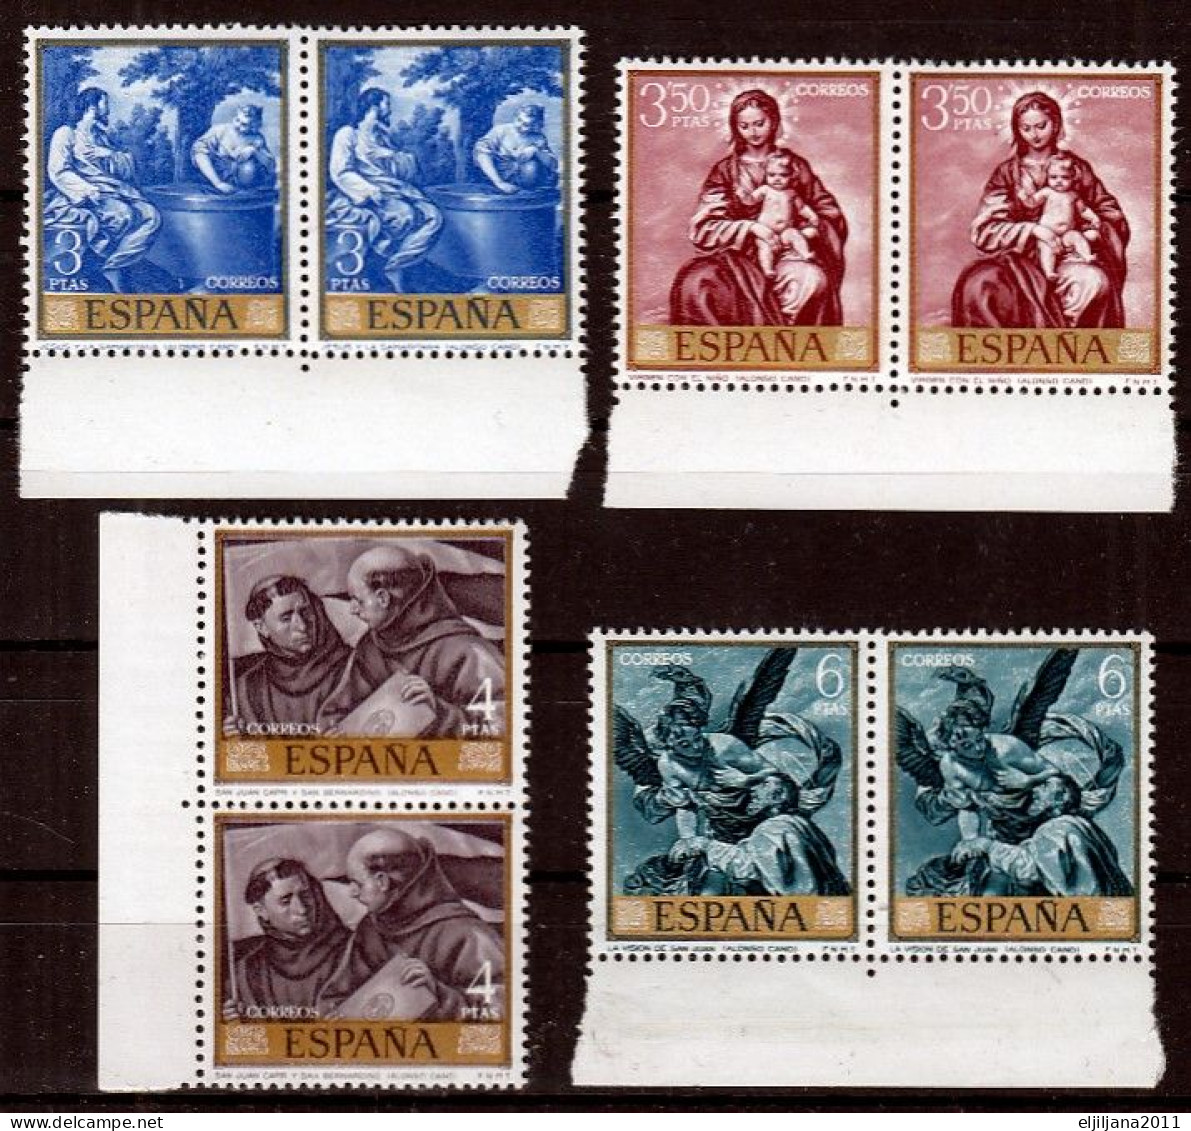 ⁕ SPAIN / ESPANA 1969 ⁕ Alonso Cano (stamp Day) Art Painting Gemalde Mi.1796-1805 X2 ⁕ MNH - Nuovi